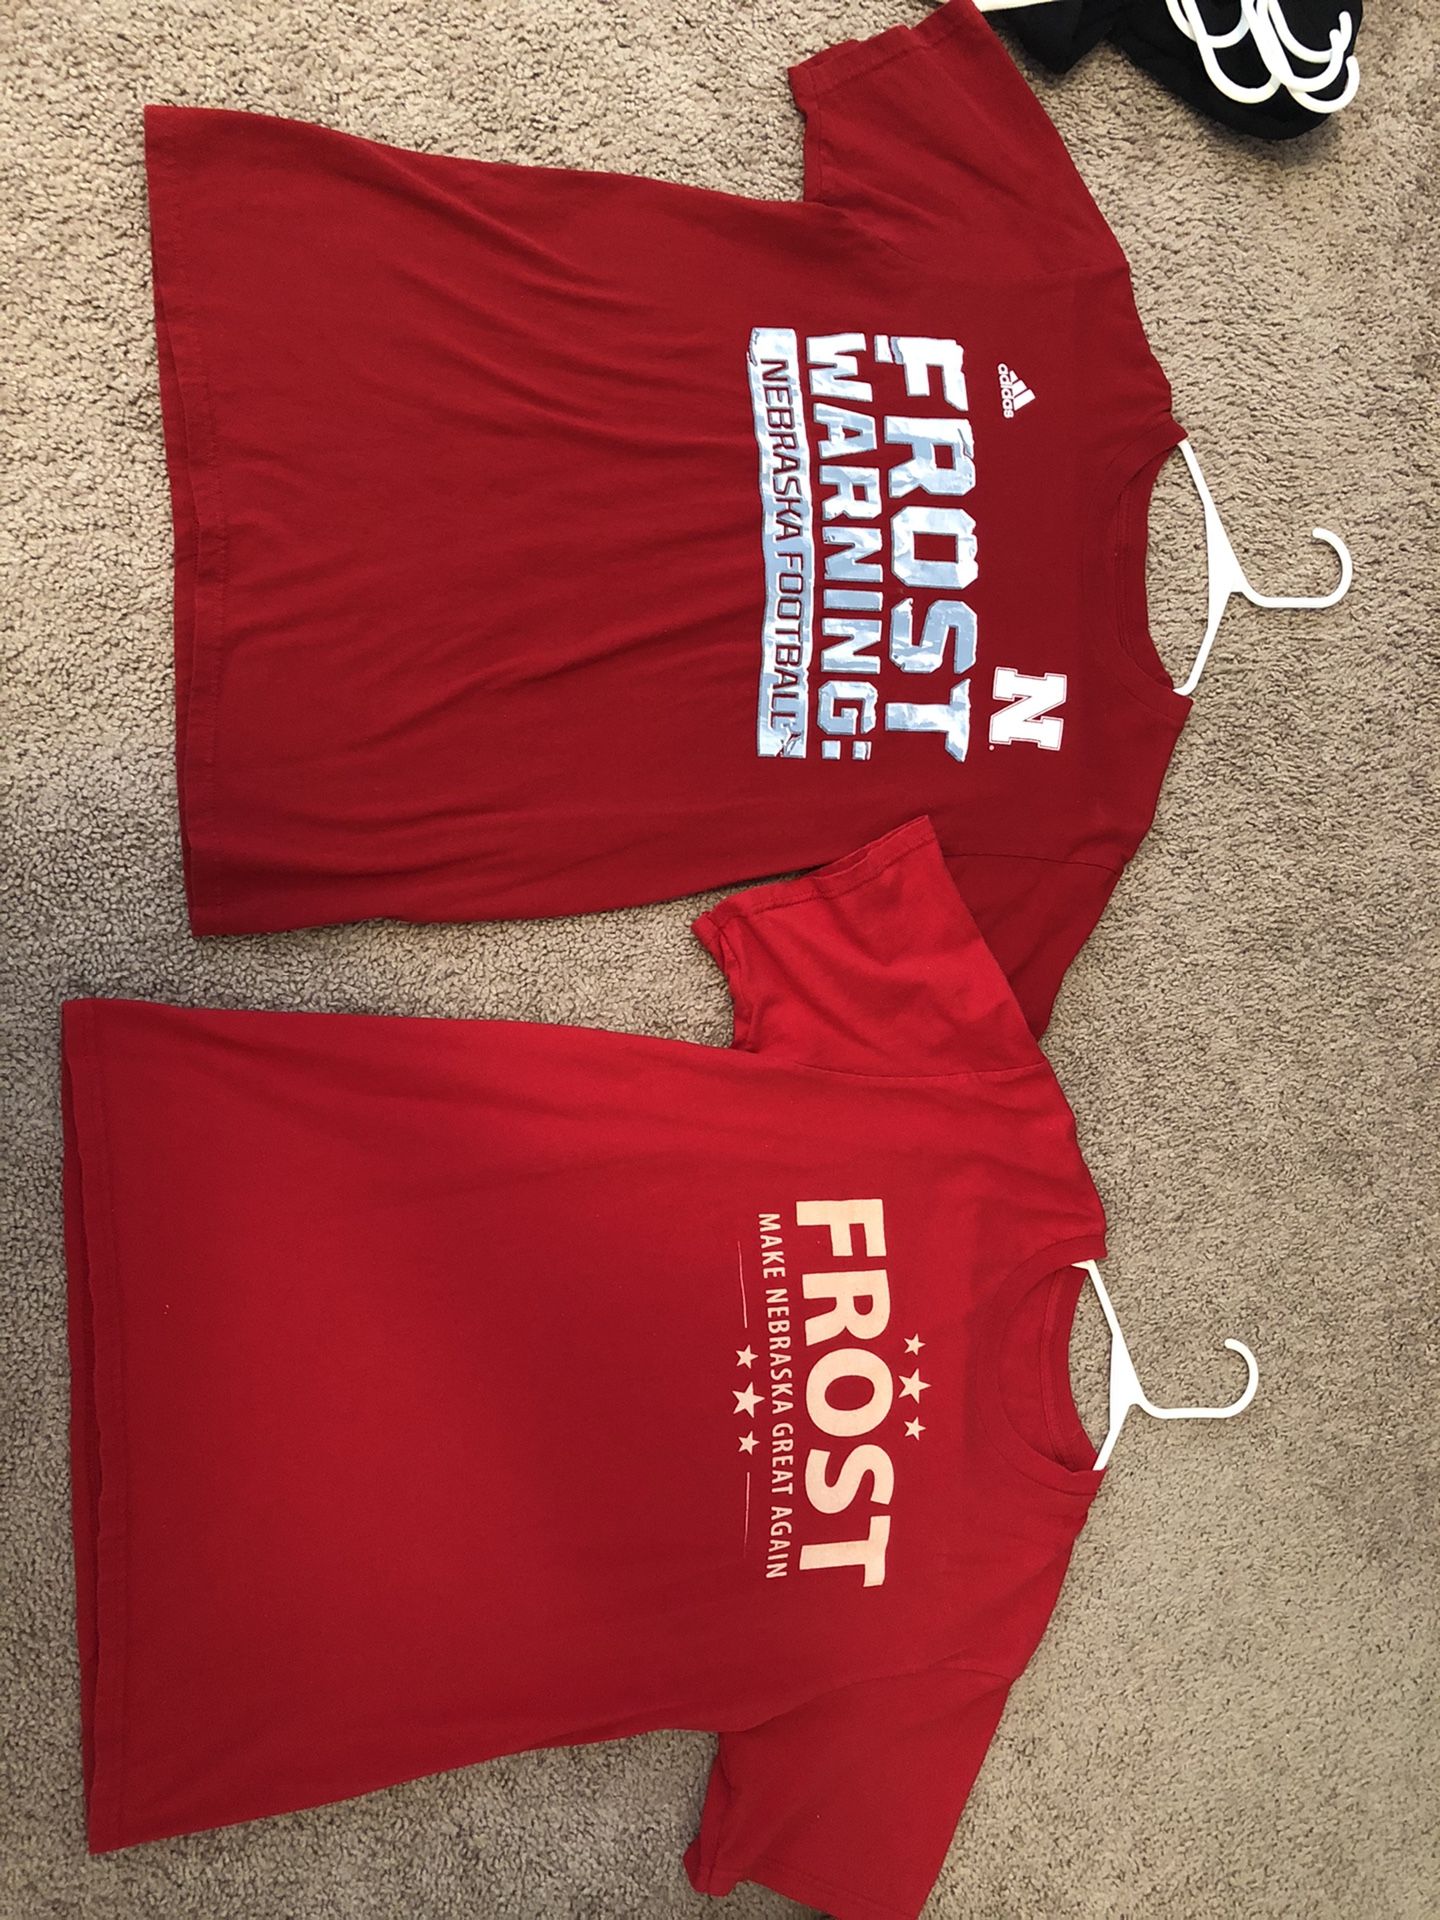 Nebraska Football Shirts